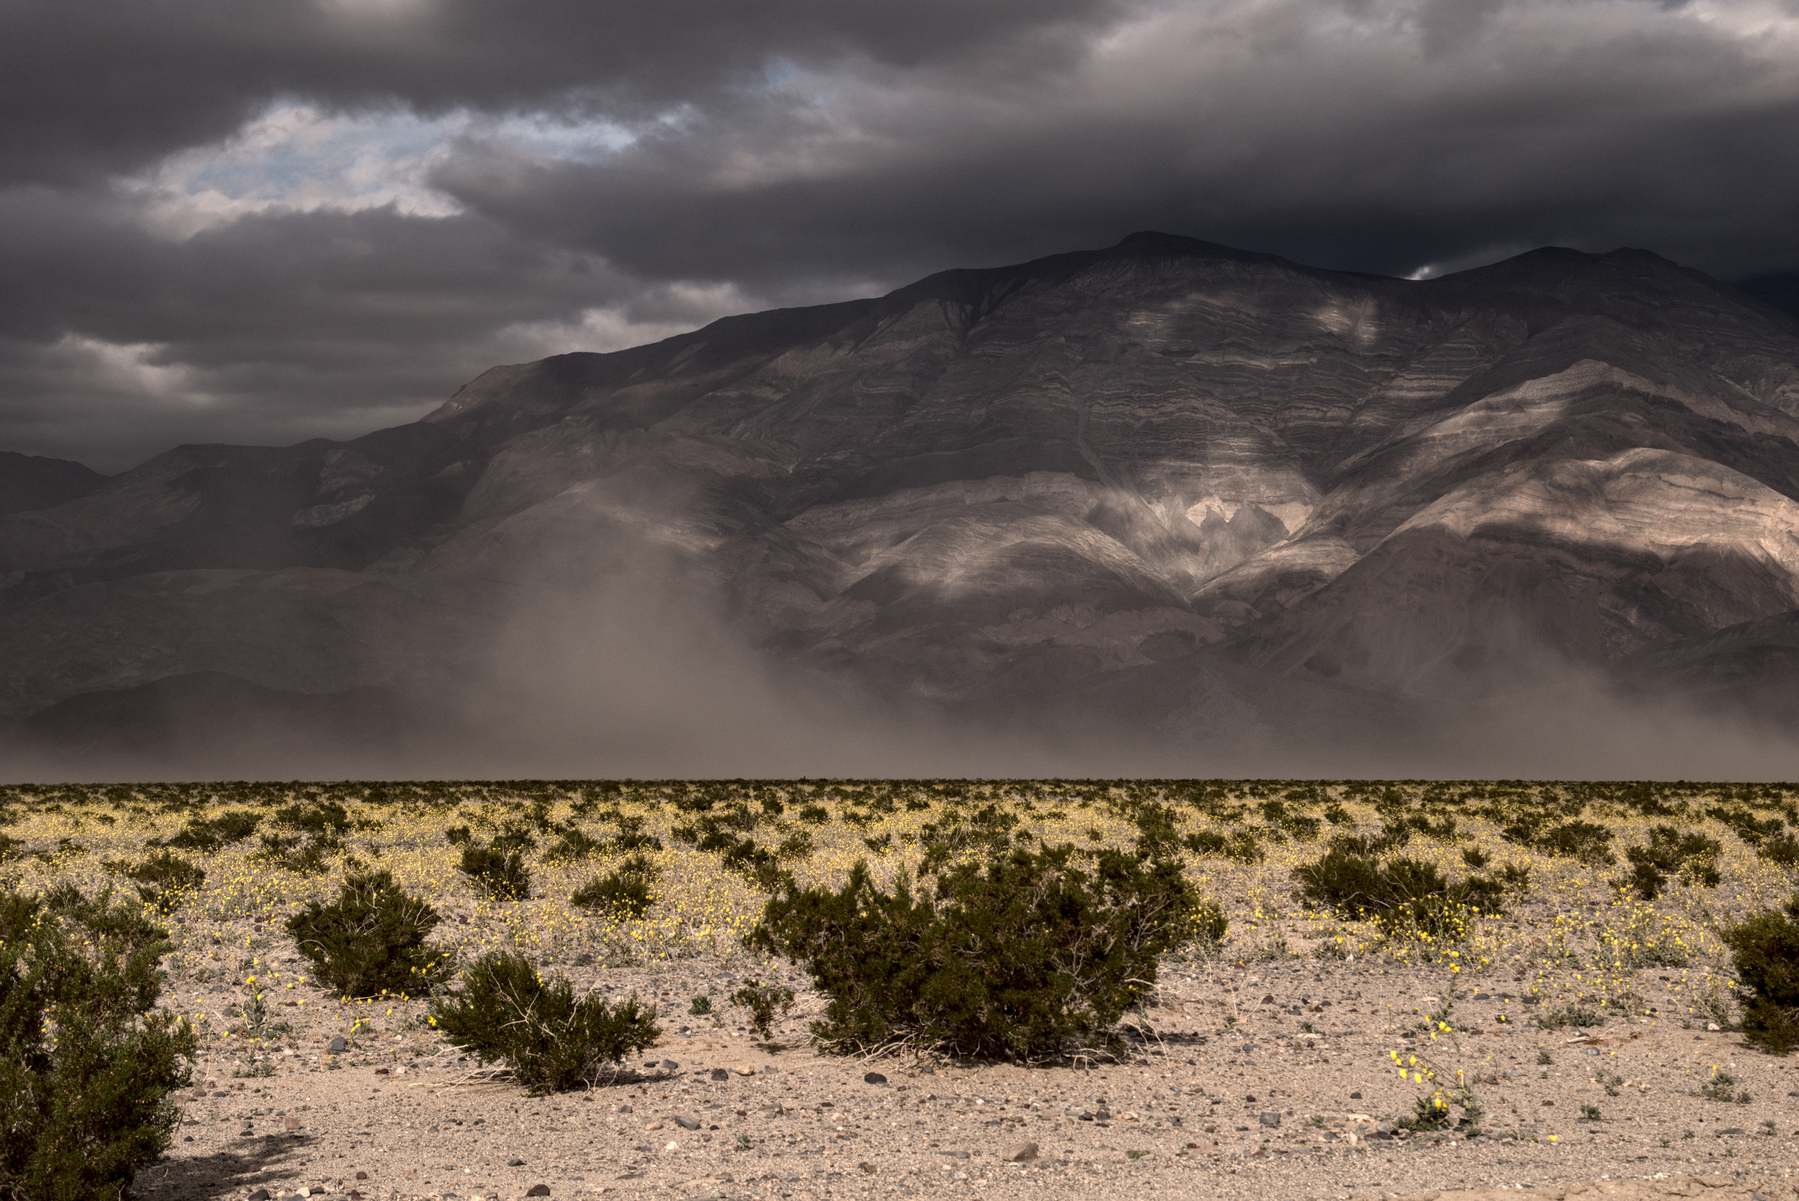 Yellow flowers fill a desert valley floor.  Barren mountains loom in the distance.  Dark grey clouds cast deep shadows.